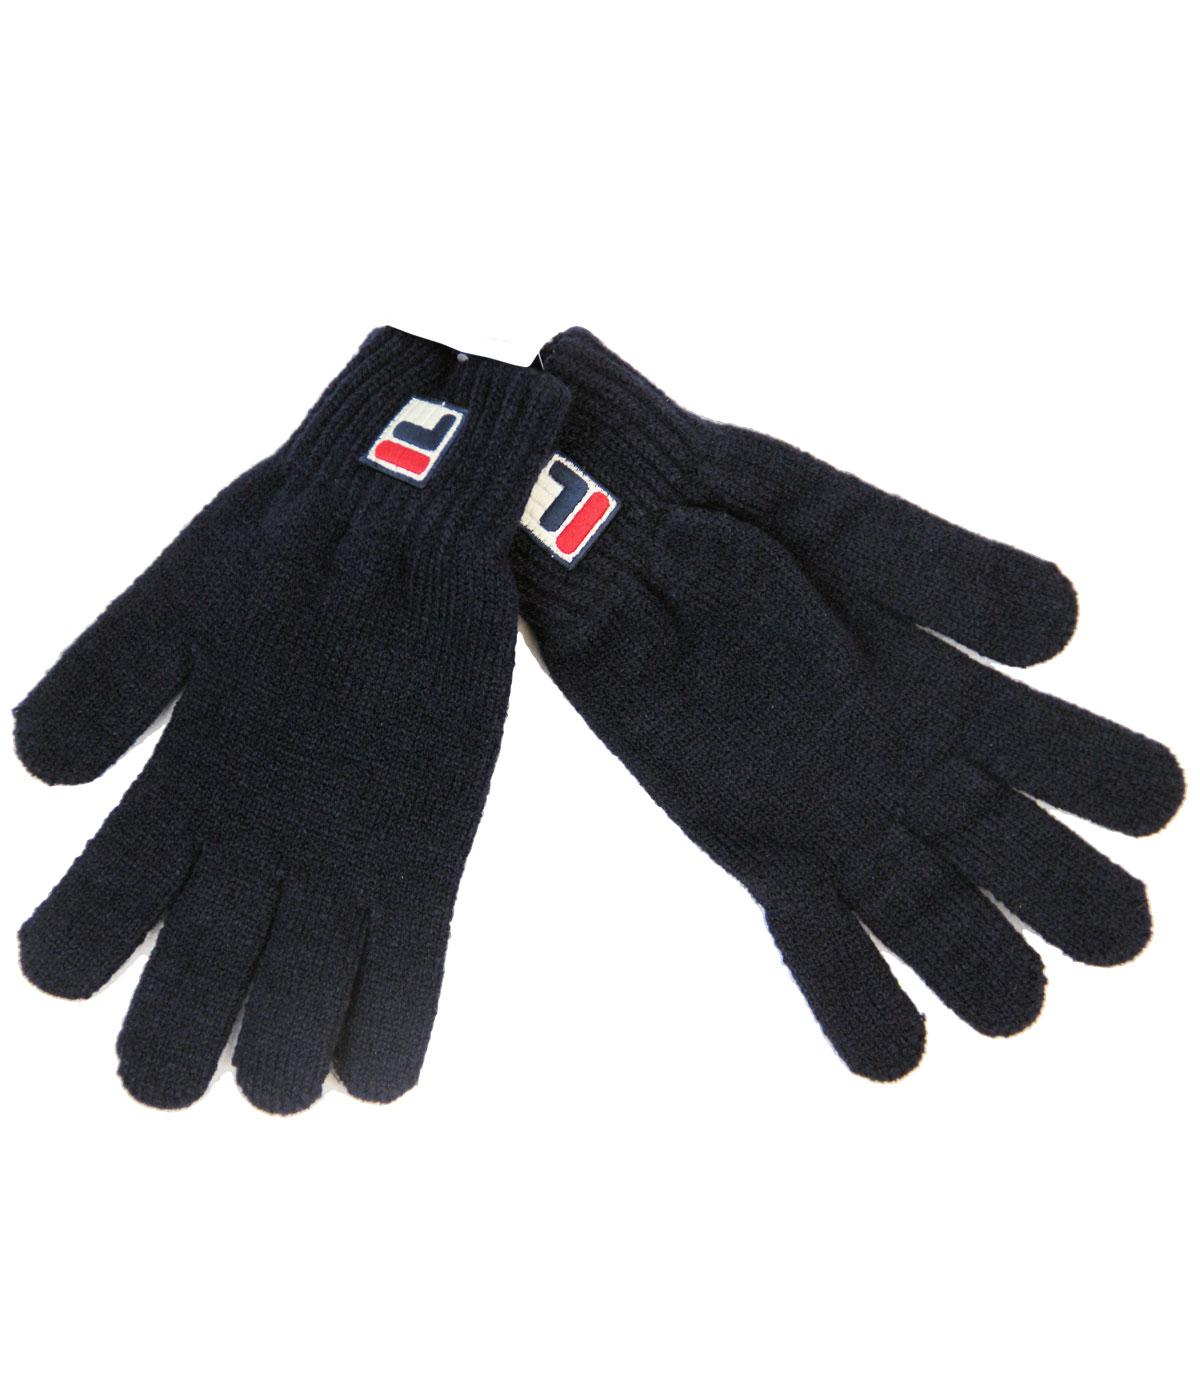 Geti FILA VINTAGE Knitted Retro 70s Ski Gloves